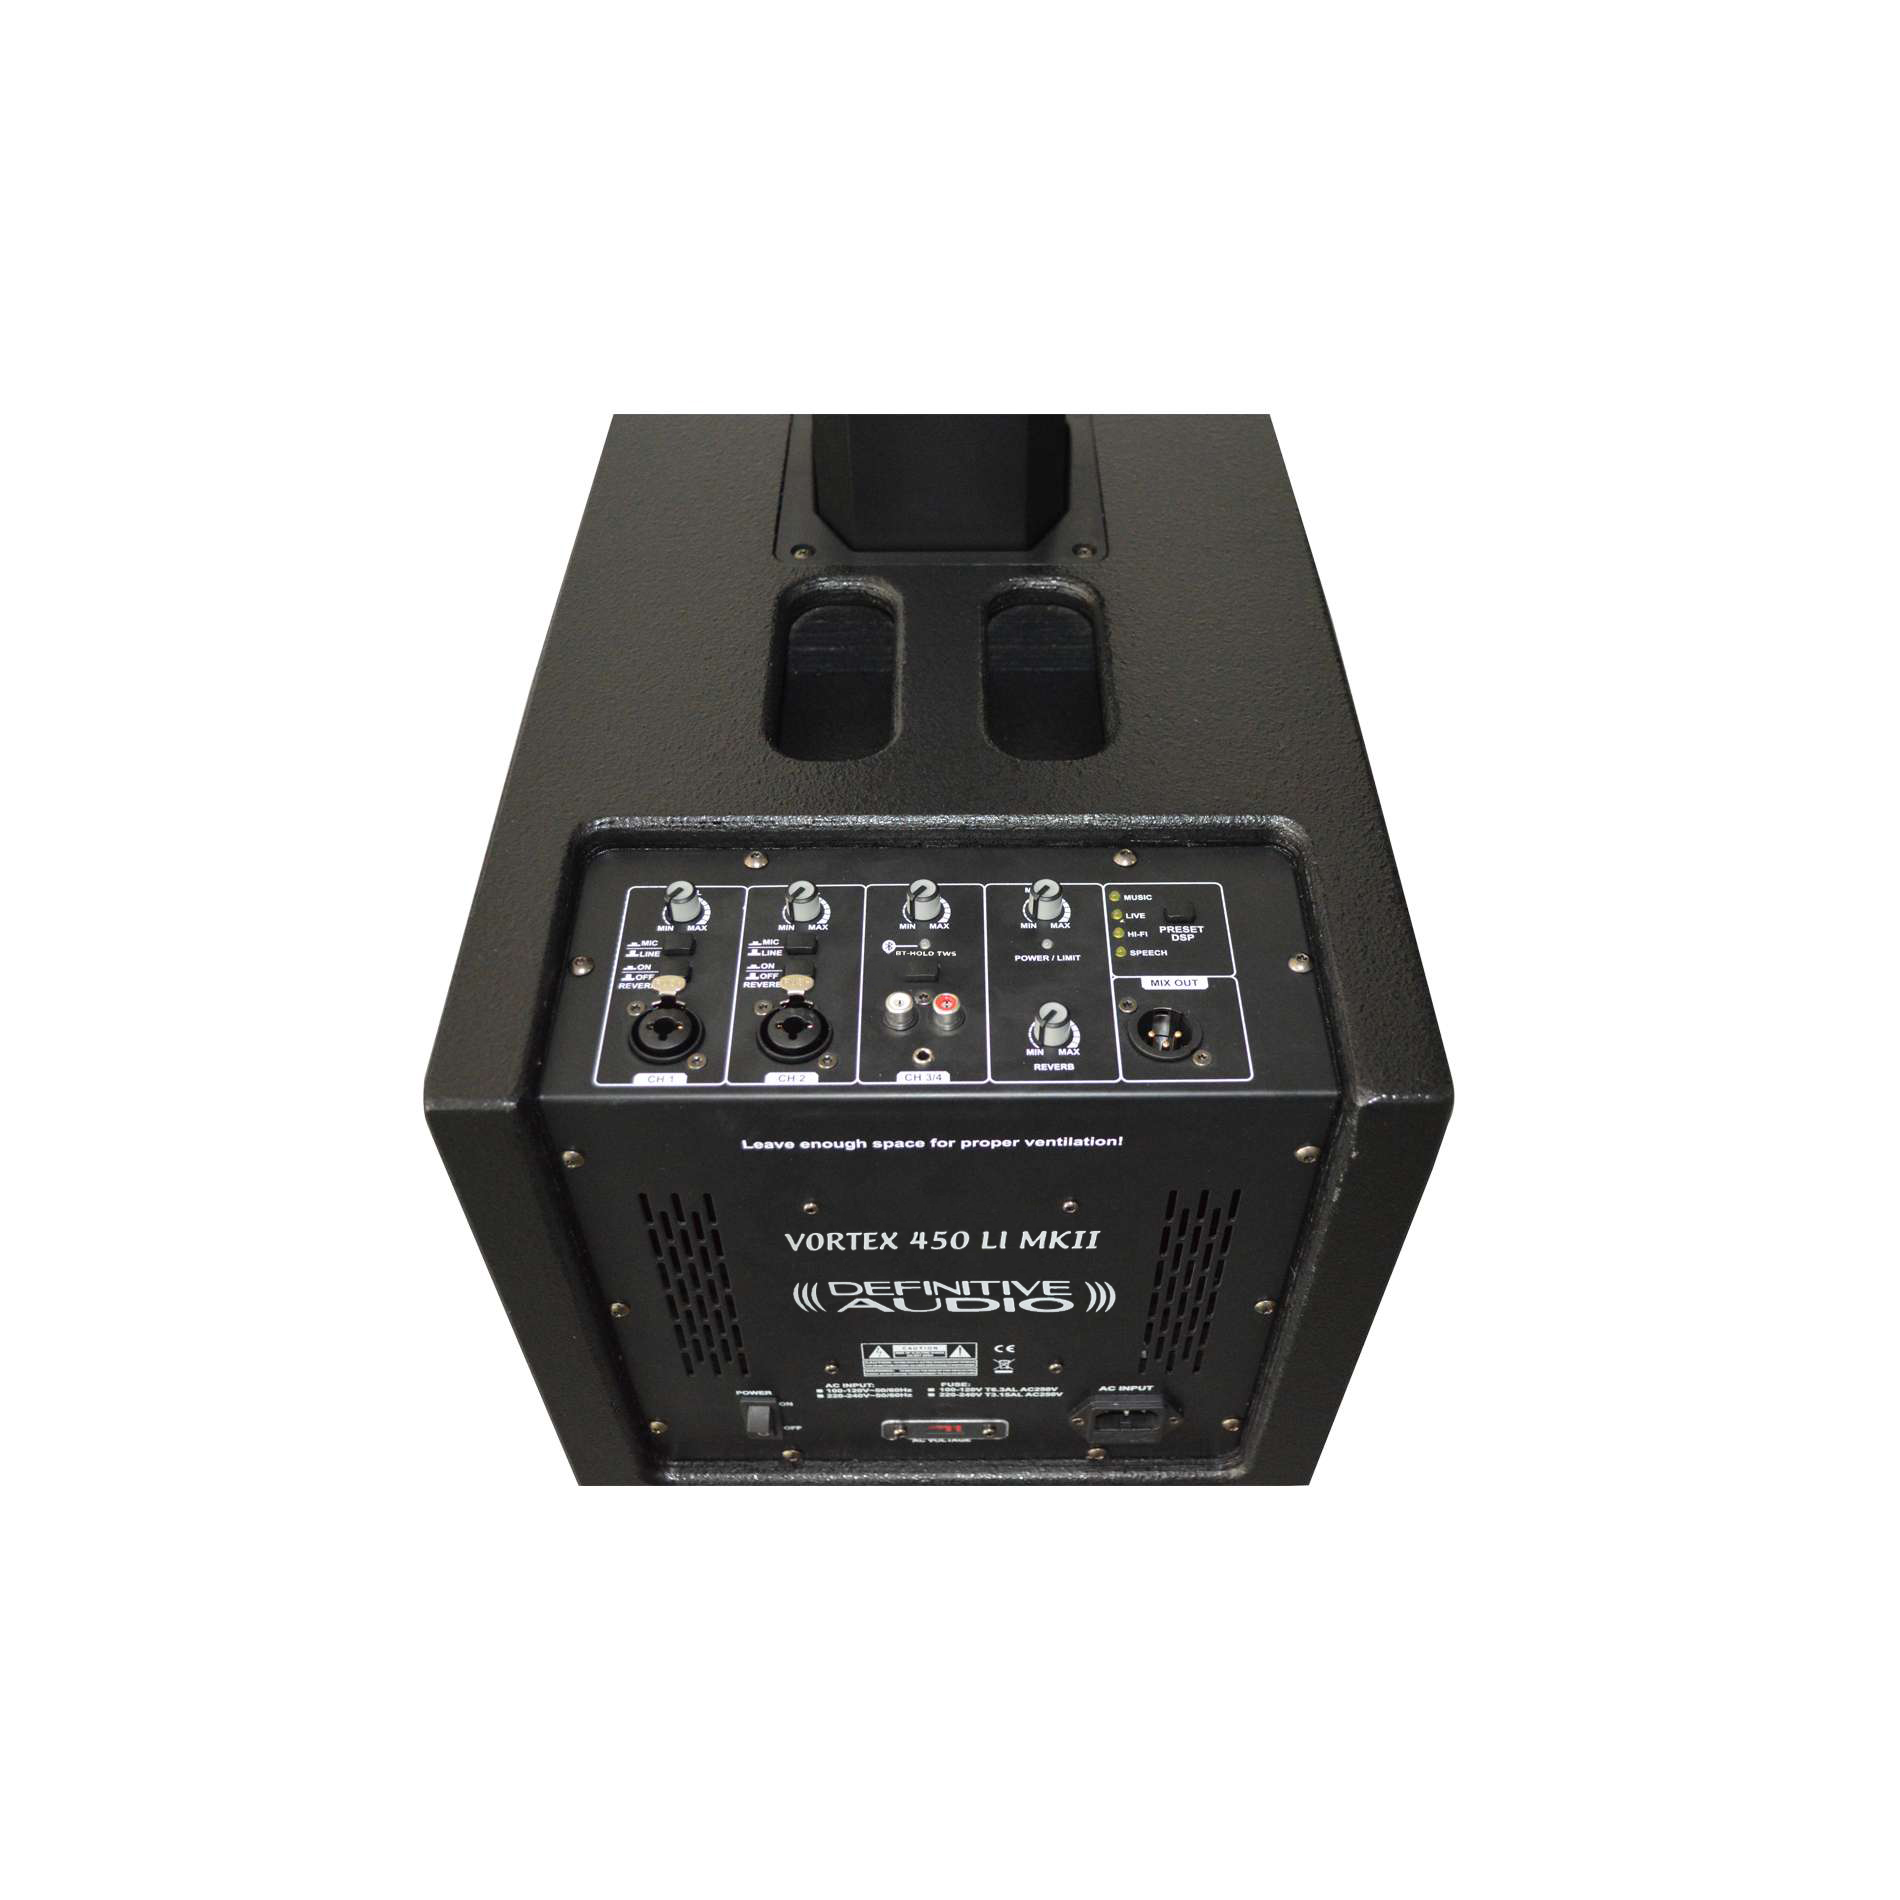 Definitive Audio Vortex 450 L1 Mk2 - Systemes Colonnes - Variation 1